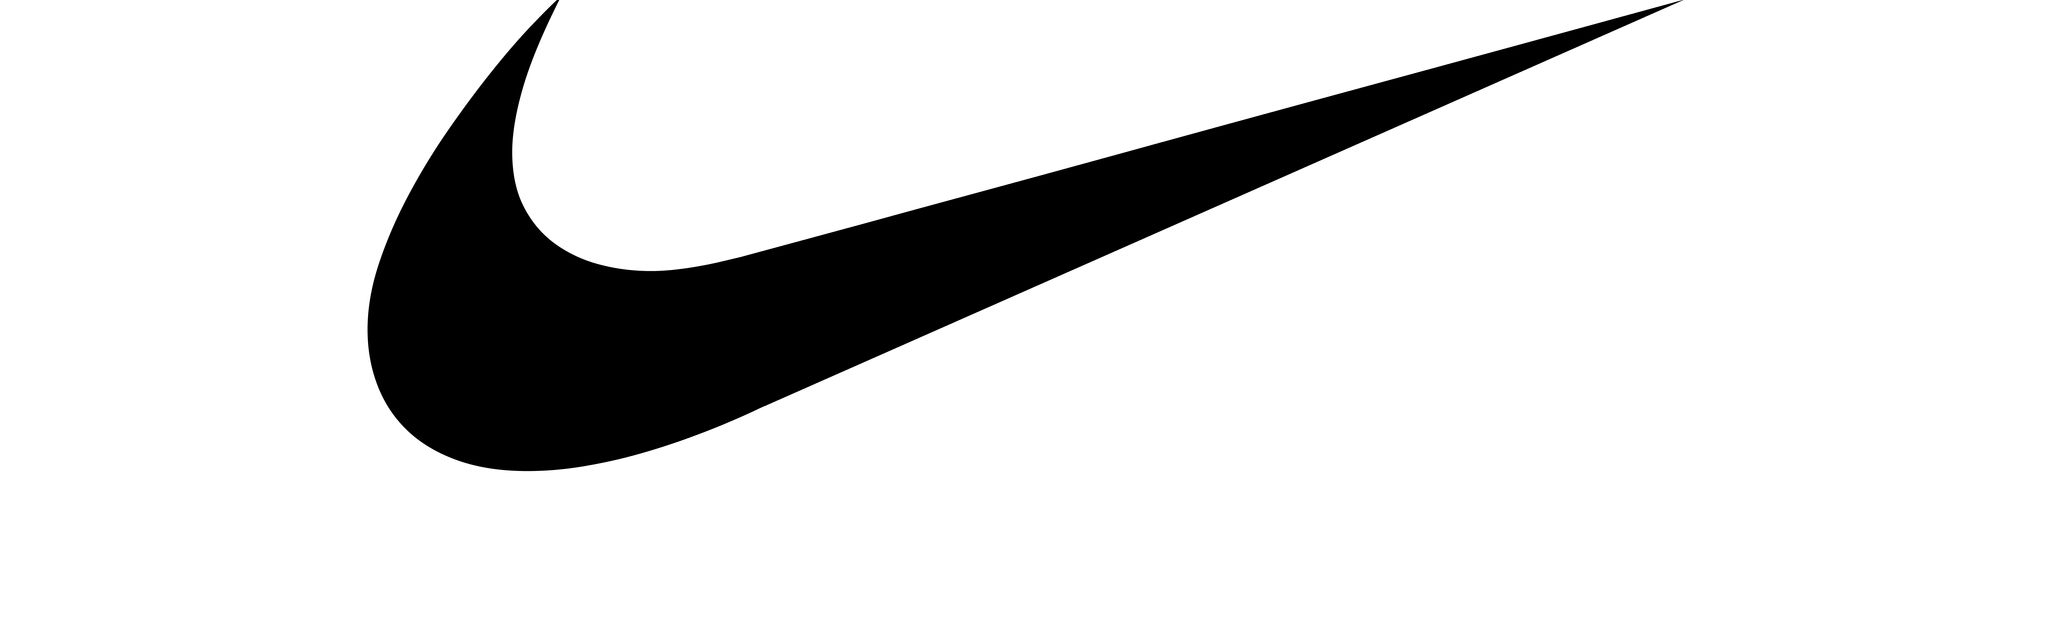 2048x640_nike-swoosh-logo-black-original